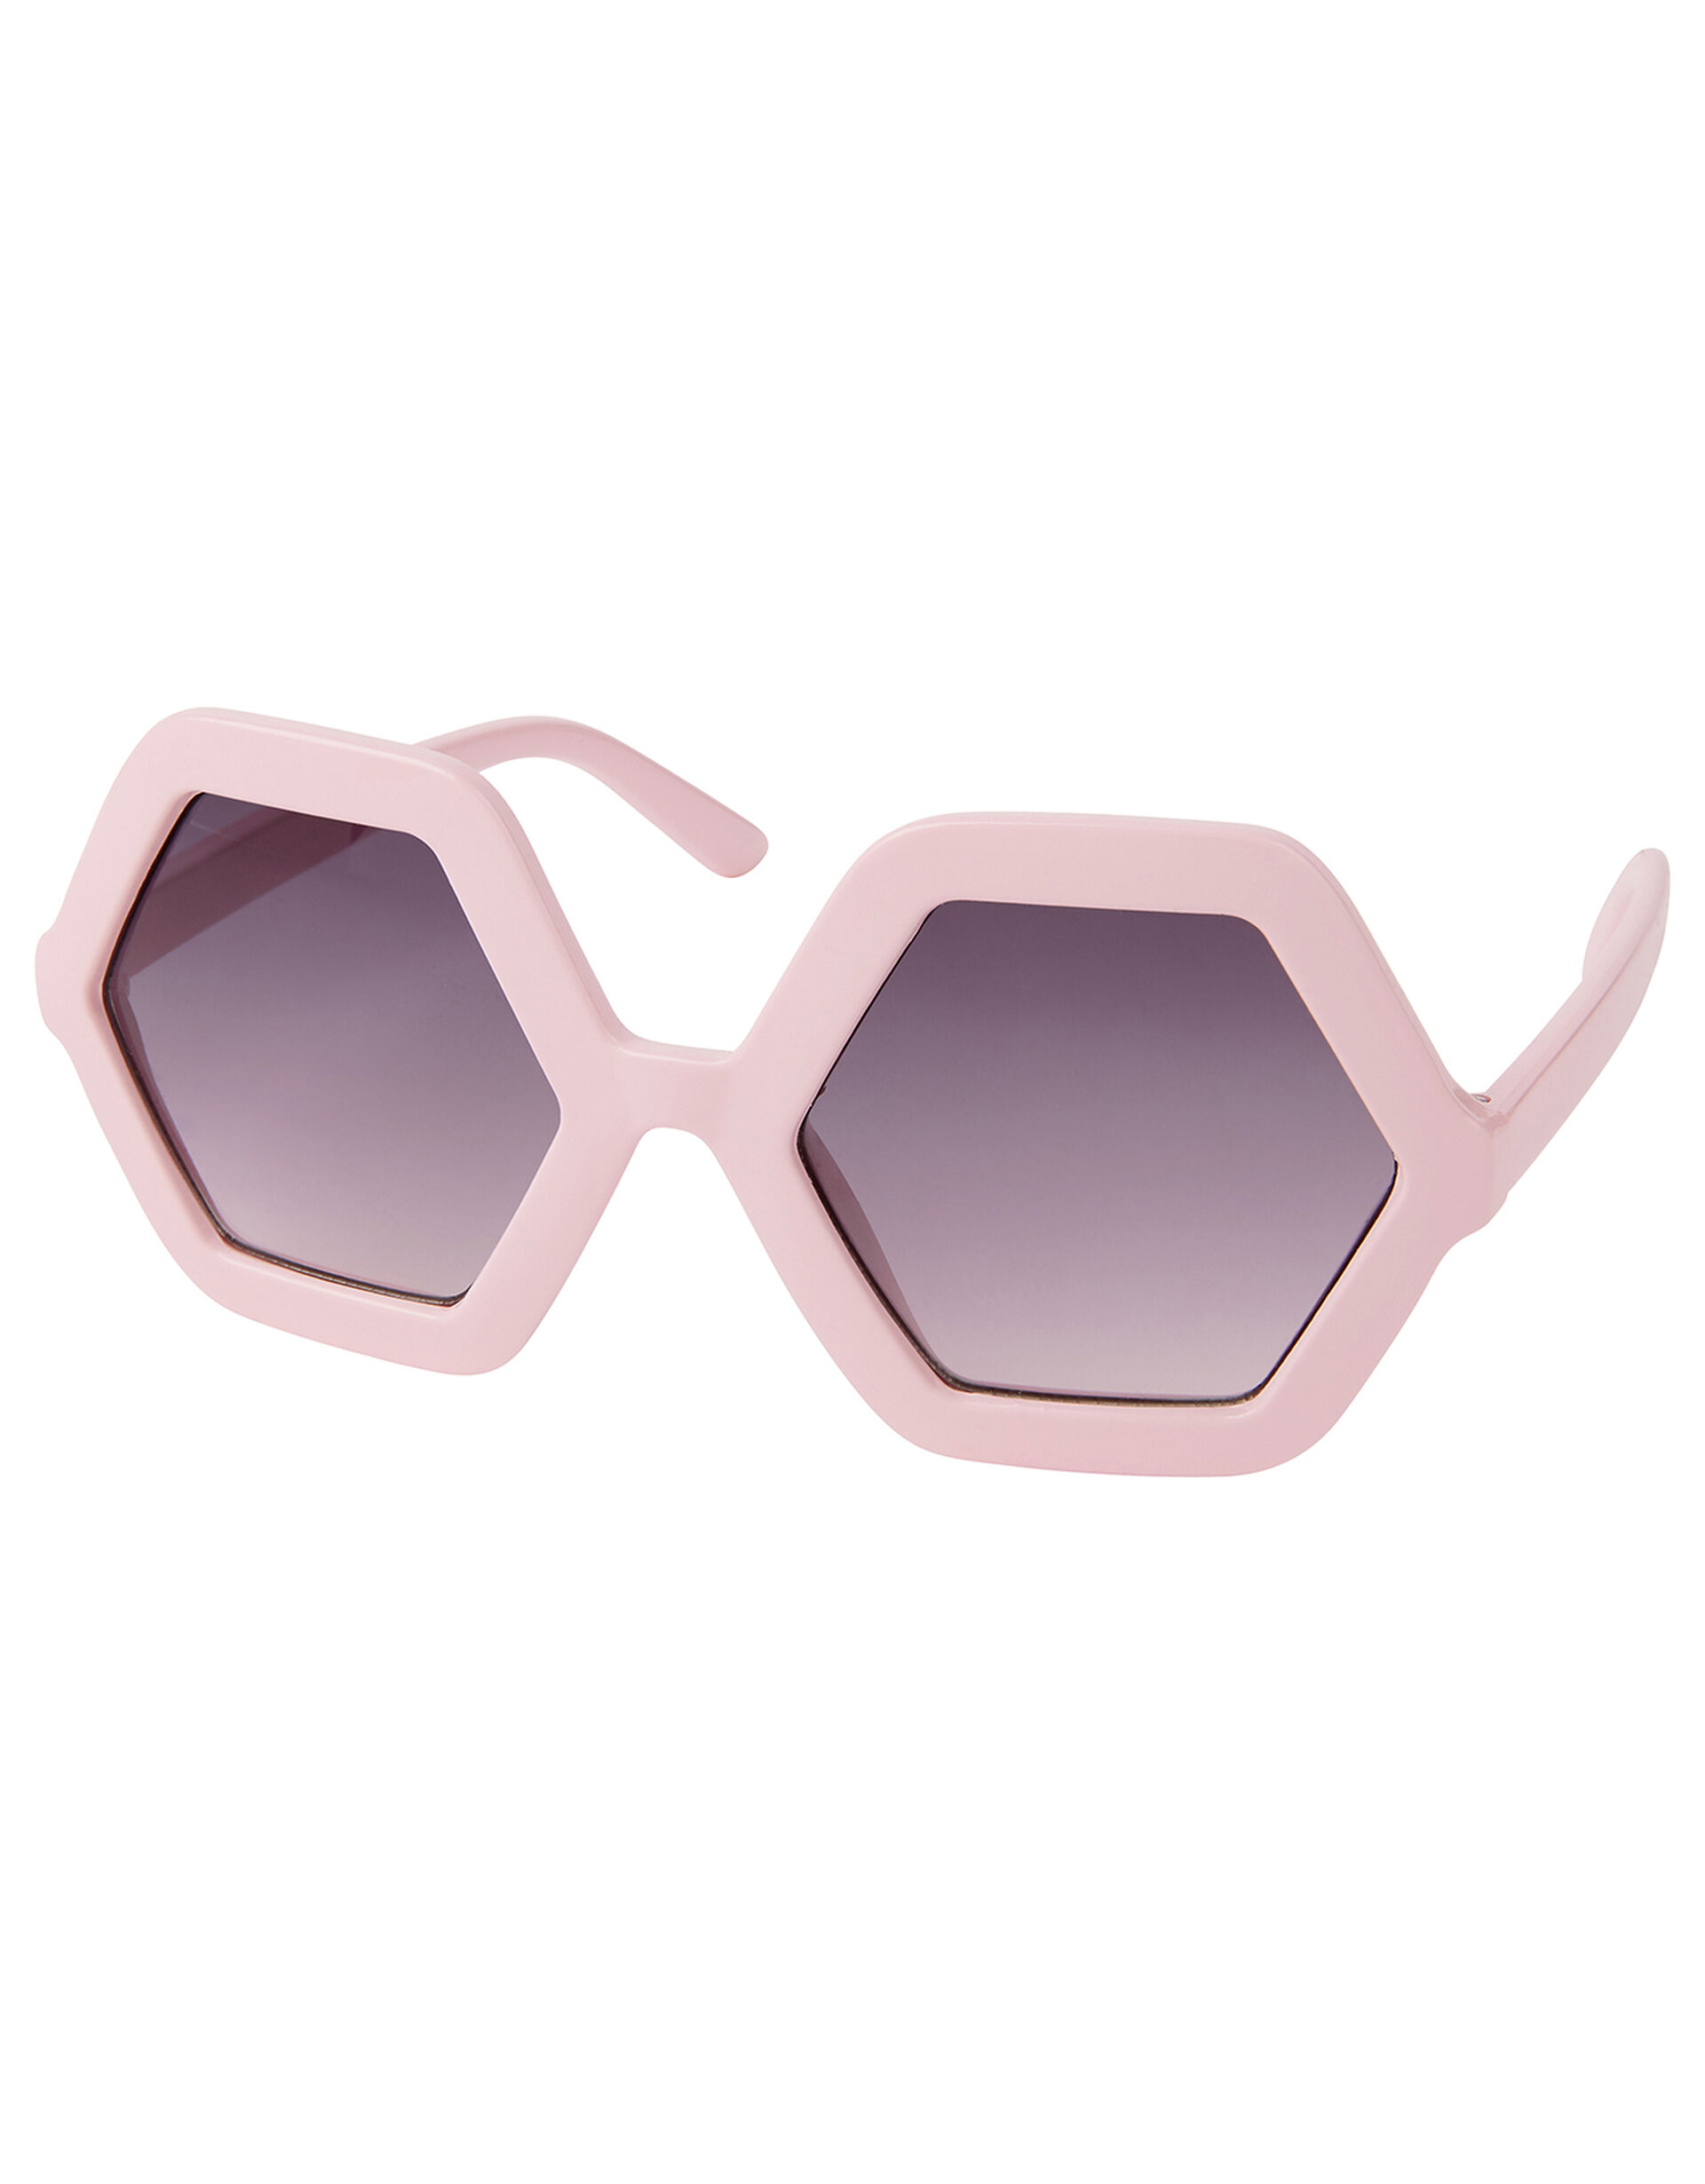 Retro Hexagon Sunglasses, , large